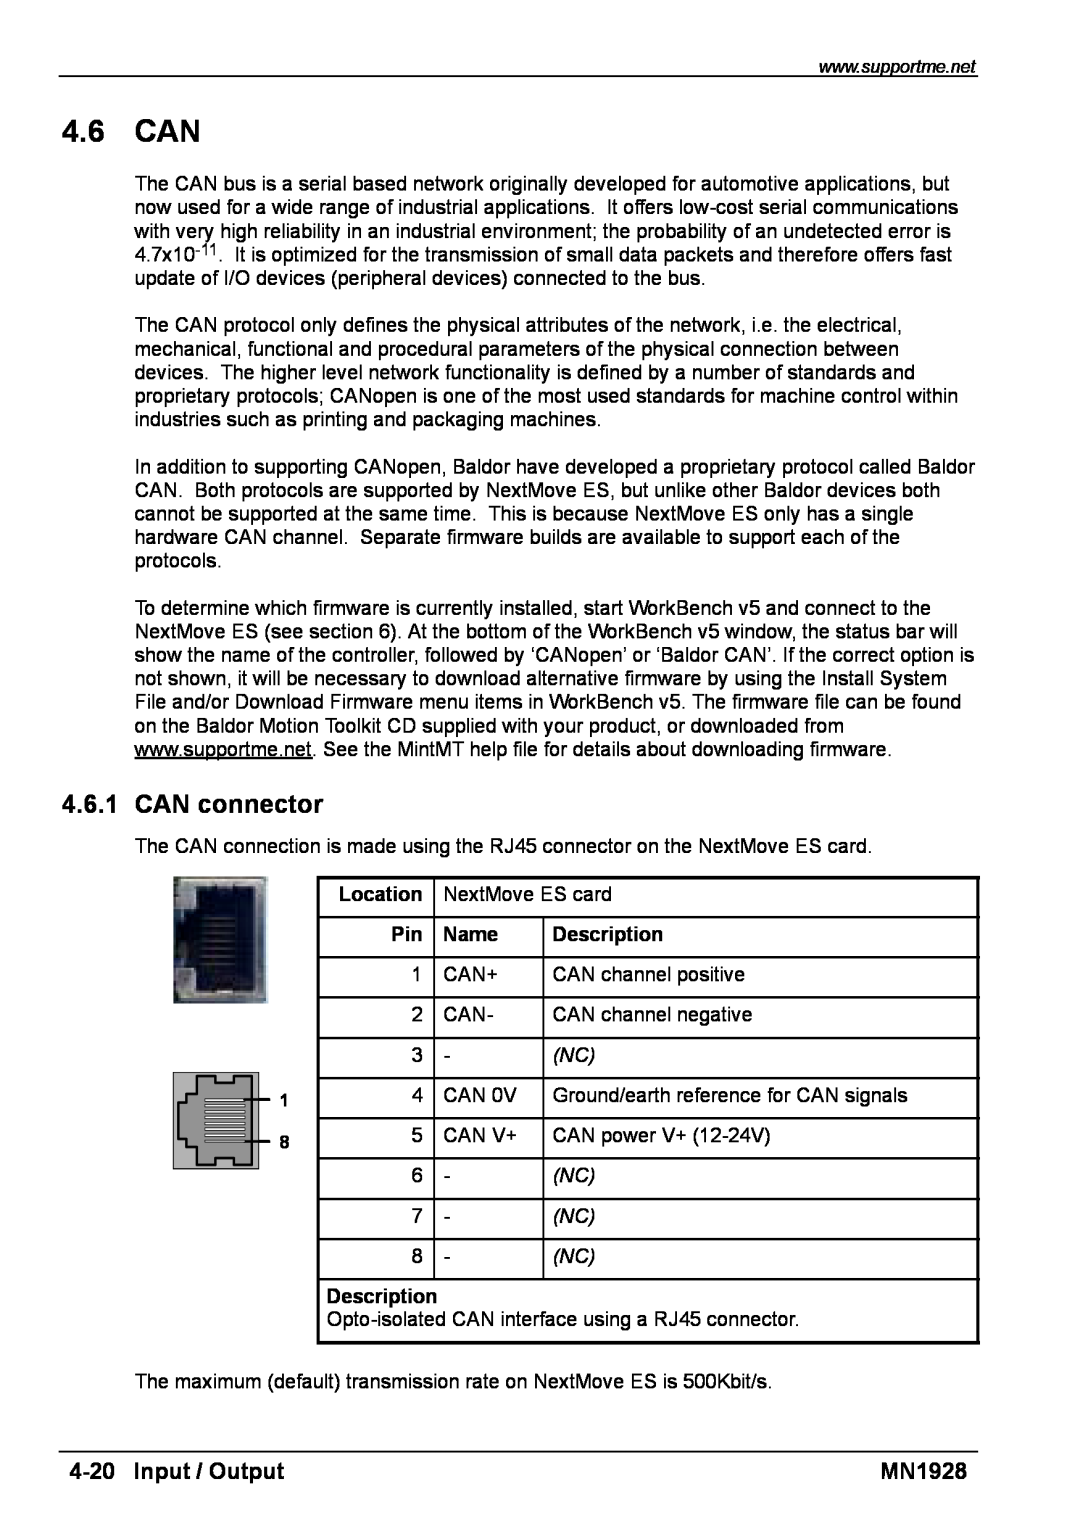 Baldor MN1928 installation manual 4.6 CAN, CAN connector, Input / Output, Location, Name, Description 